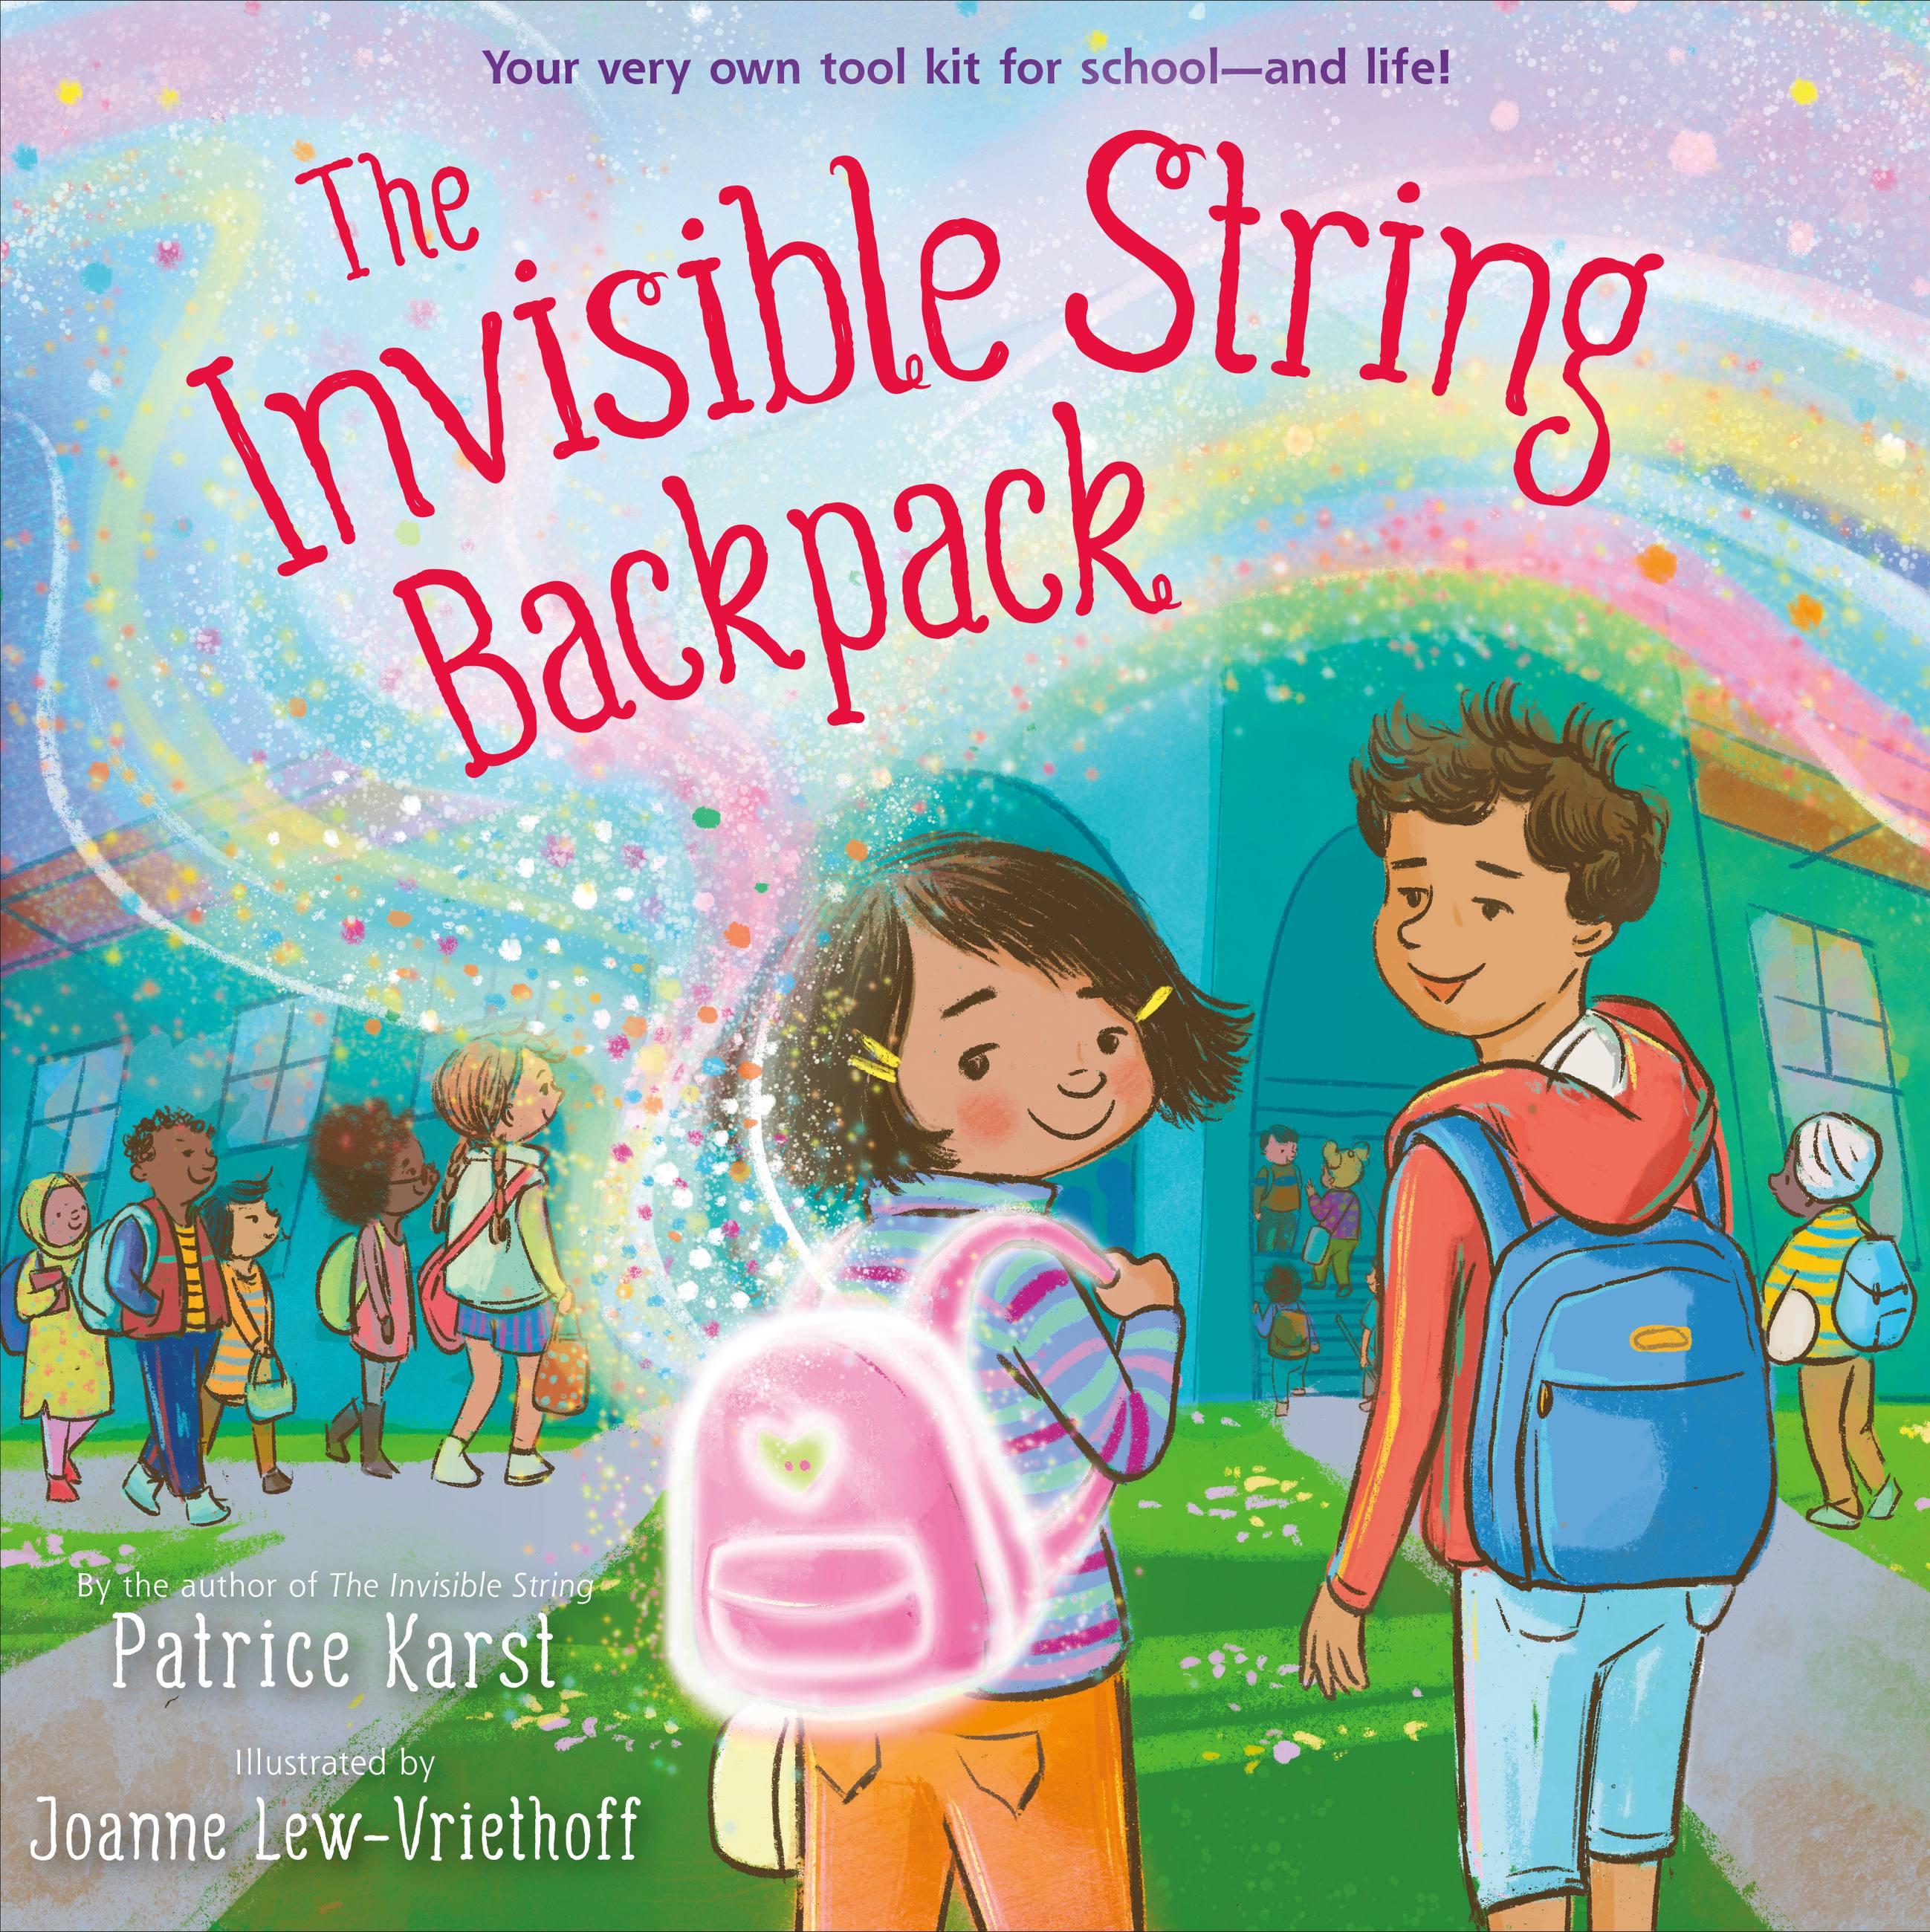 The Invisible String by Patrice Karst - SevenPonds BlogSevenPonds